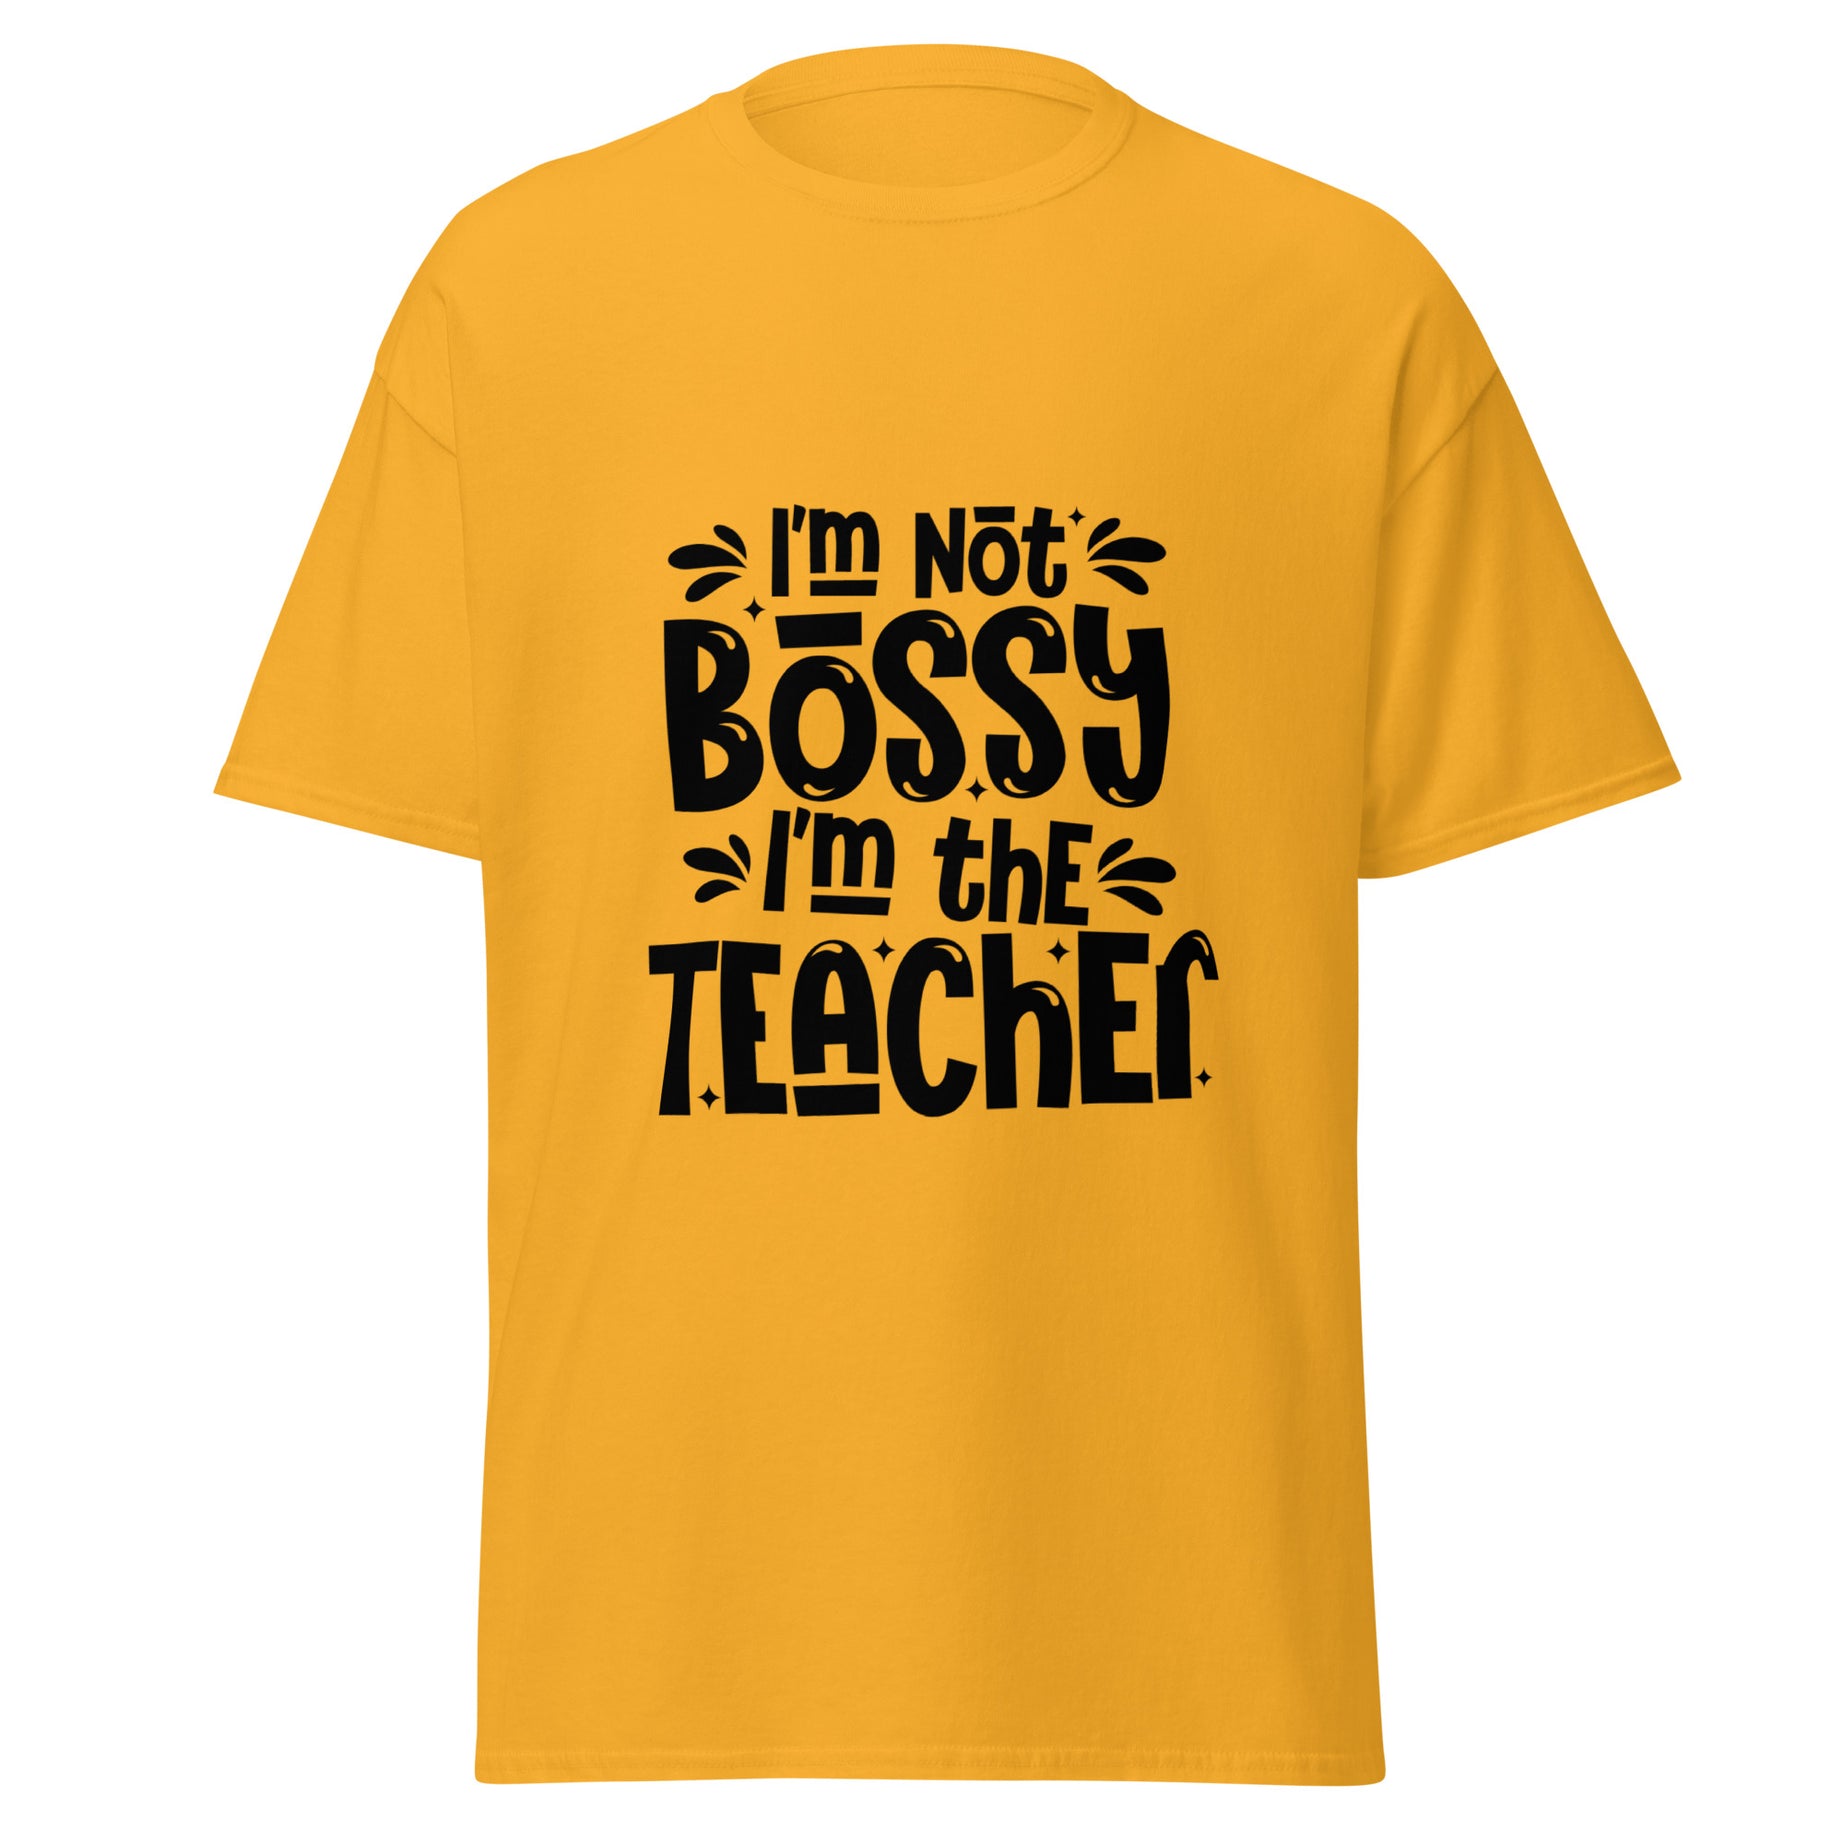 I'M NOT THE BOSSY I'M THE TEACHER T-SHIRT